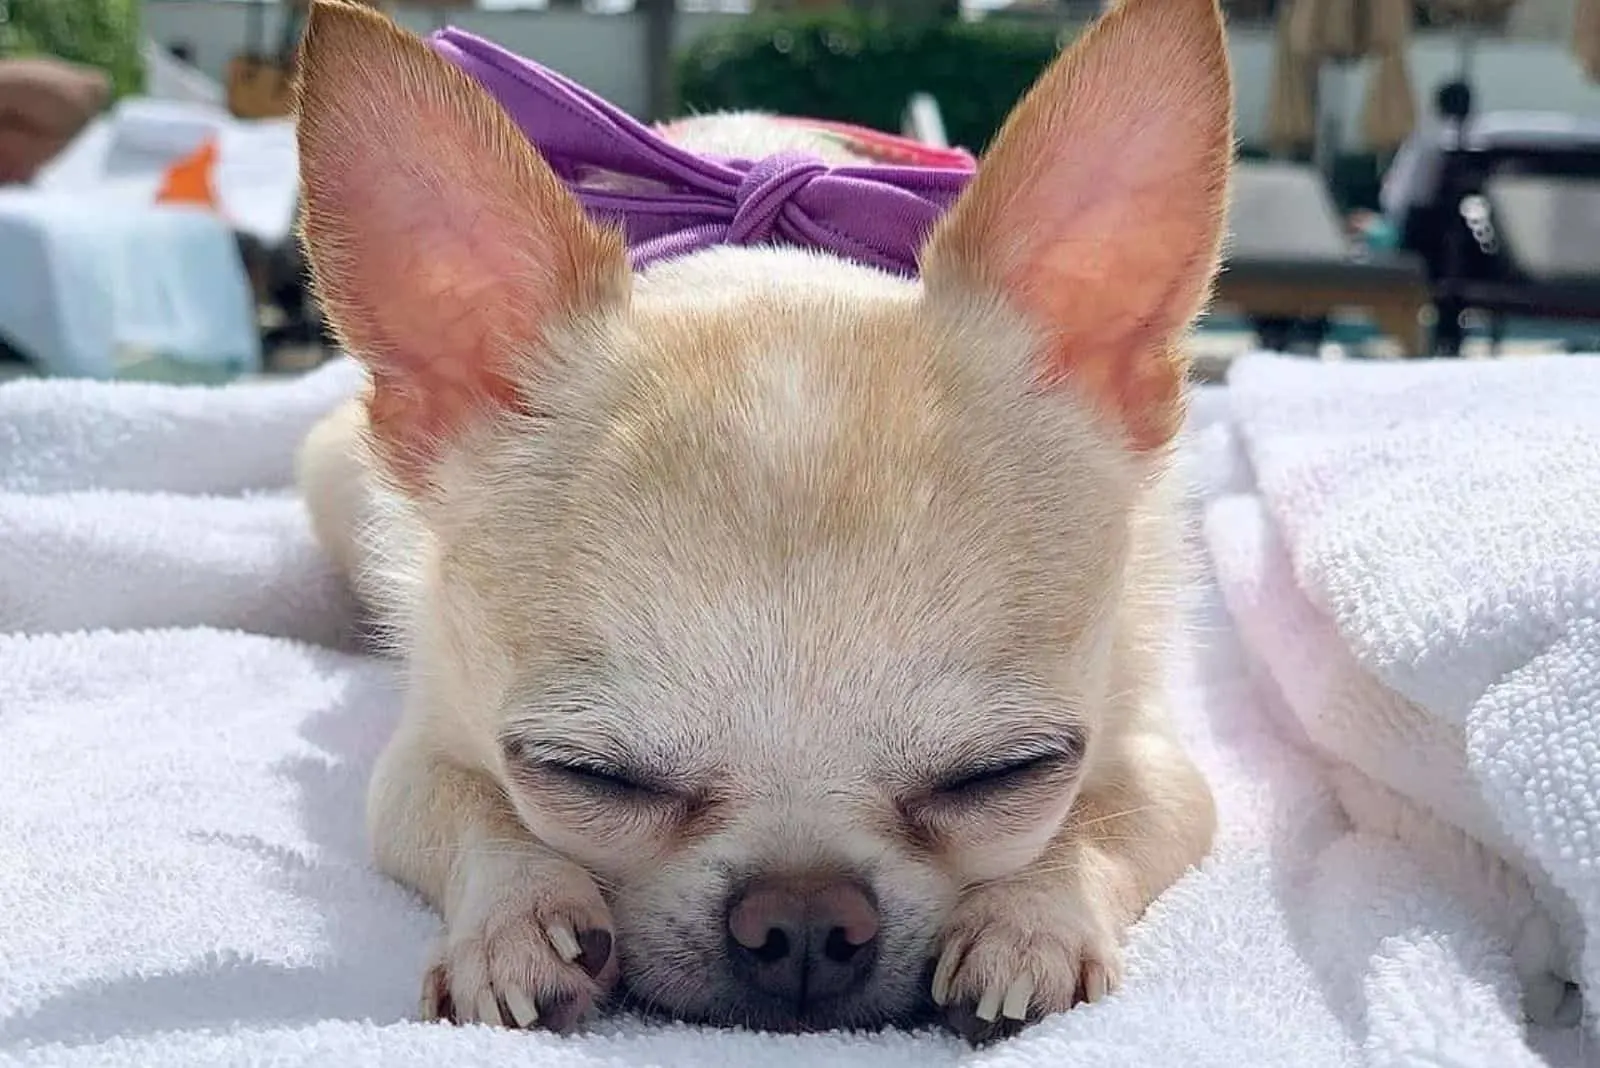 Teacup Chihuahua sleeping